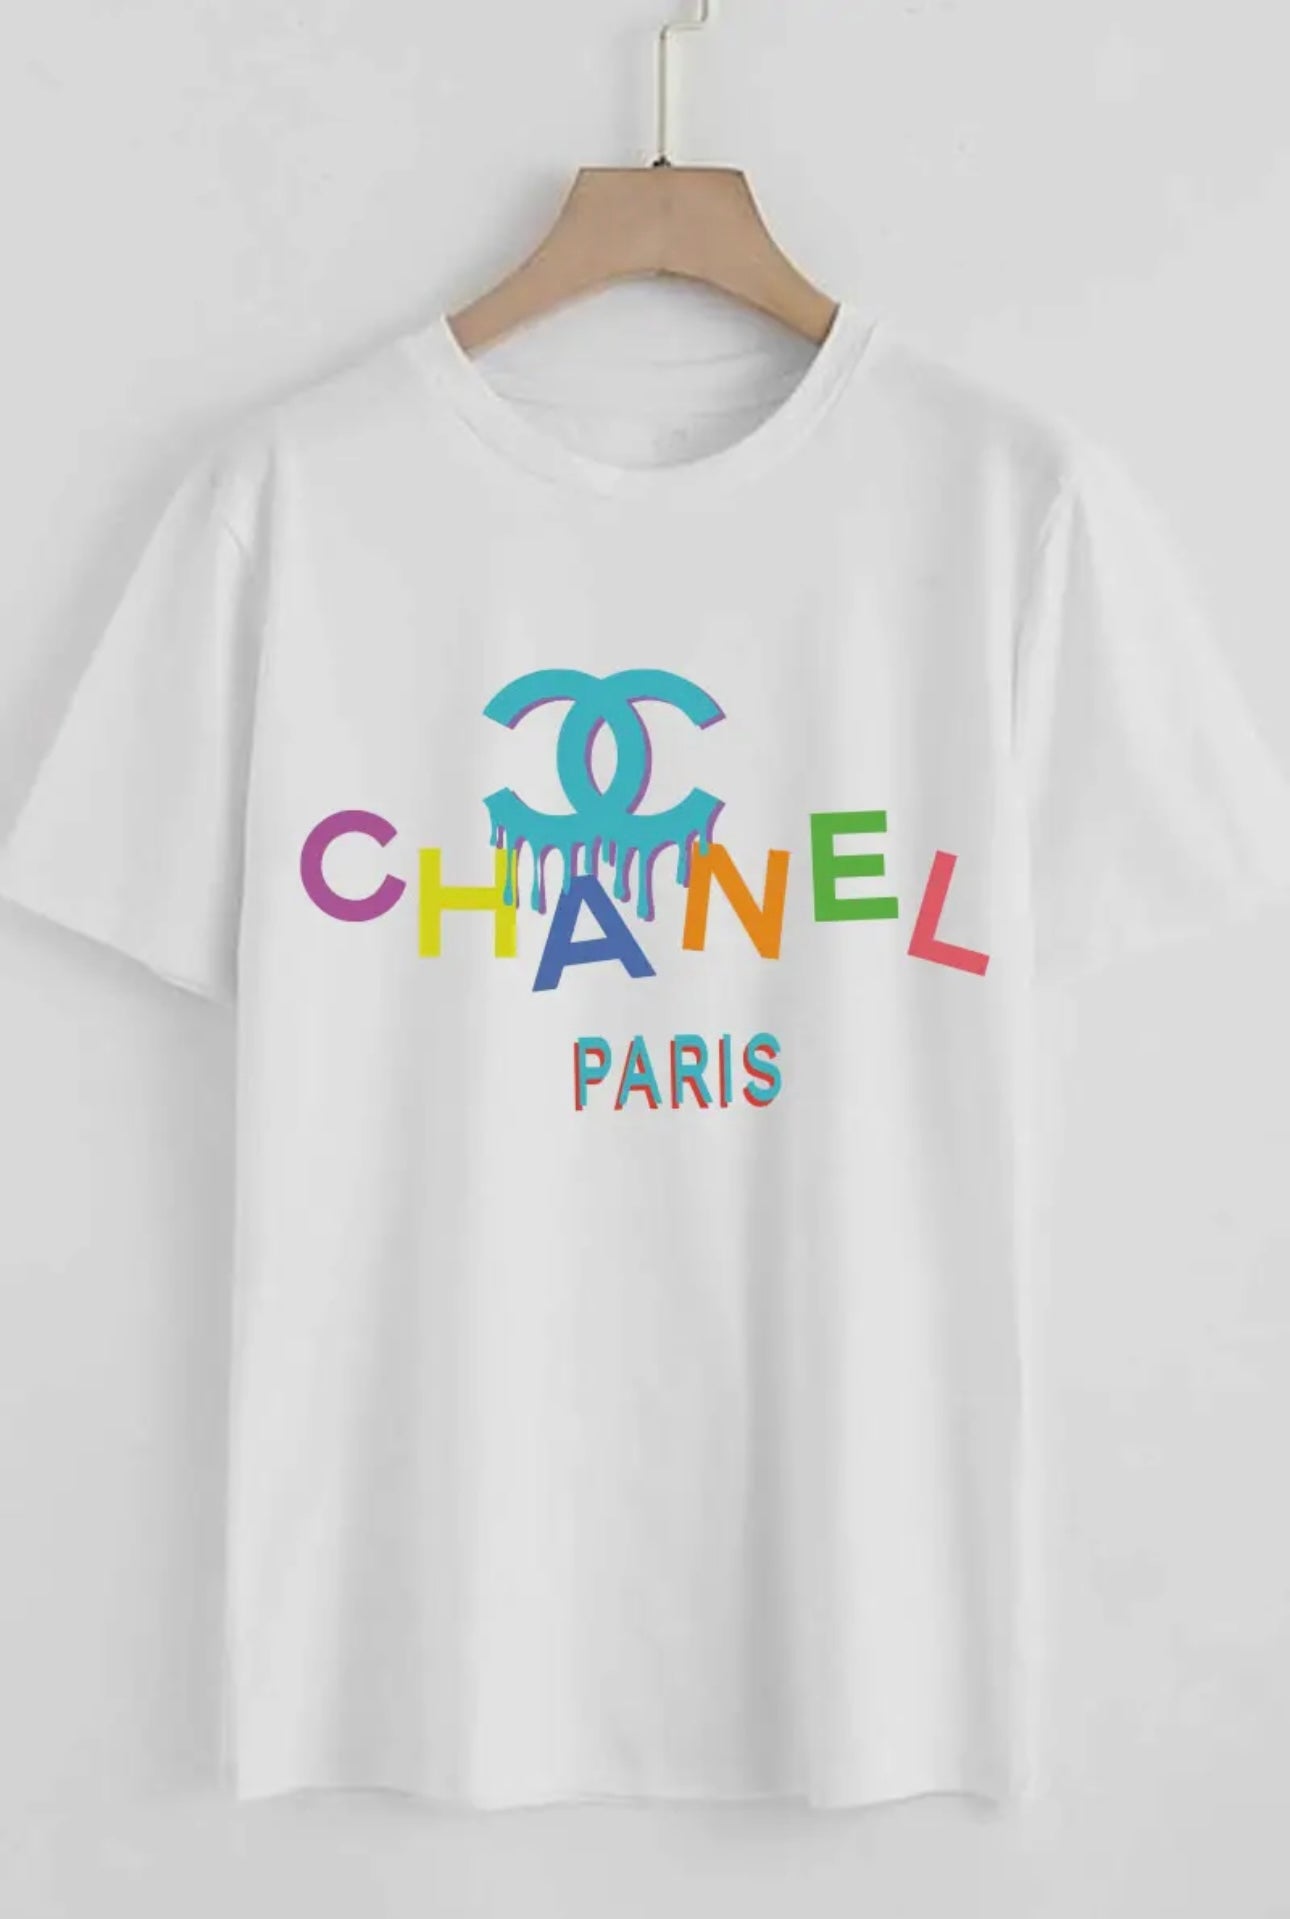 Chanel Inspired Tee Shirt